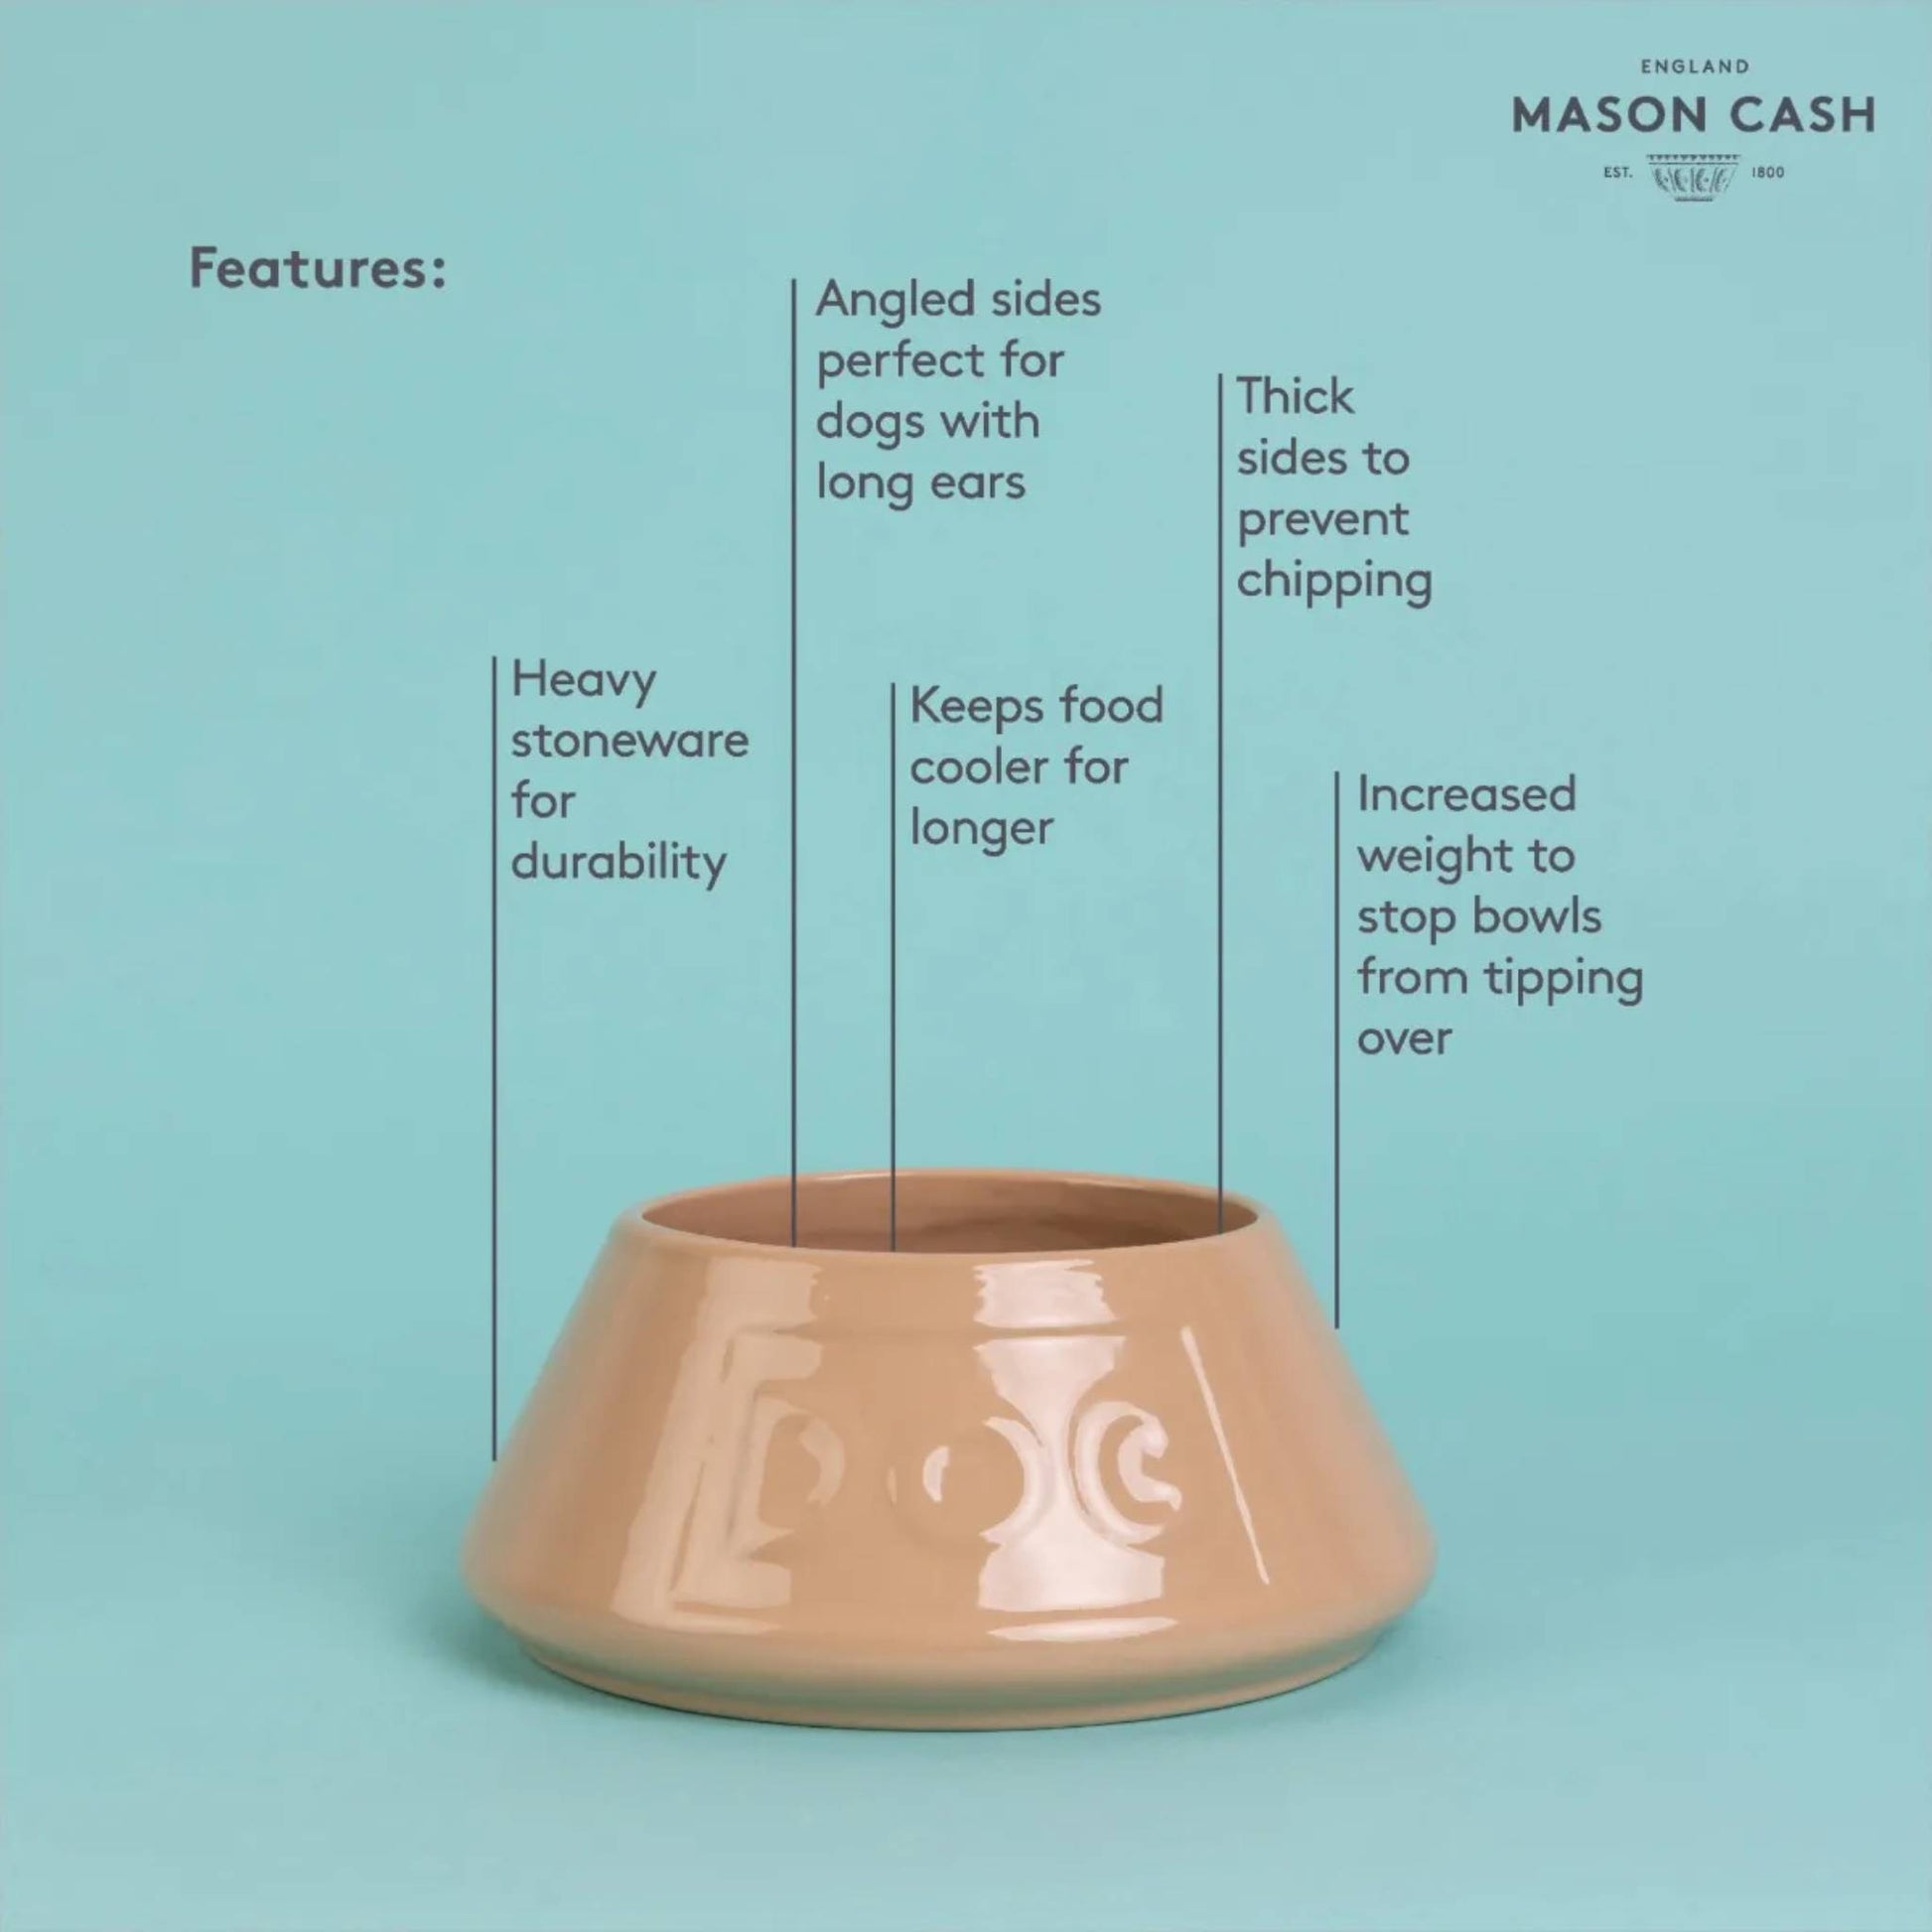 mason cash spaniel dog bowl features